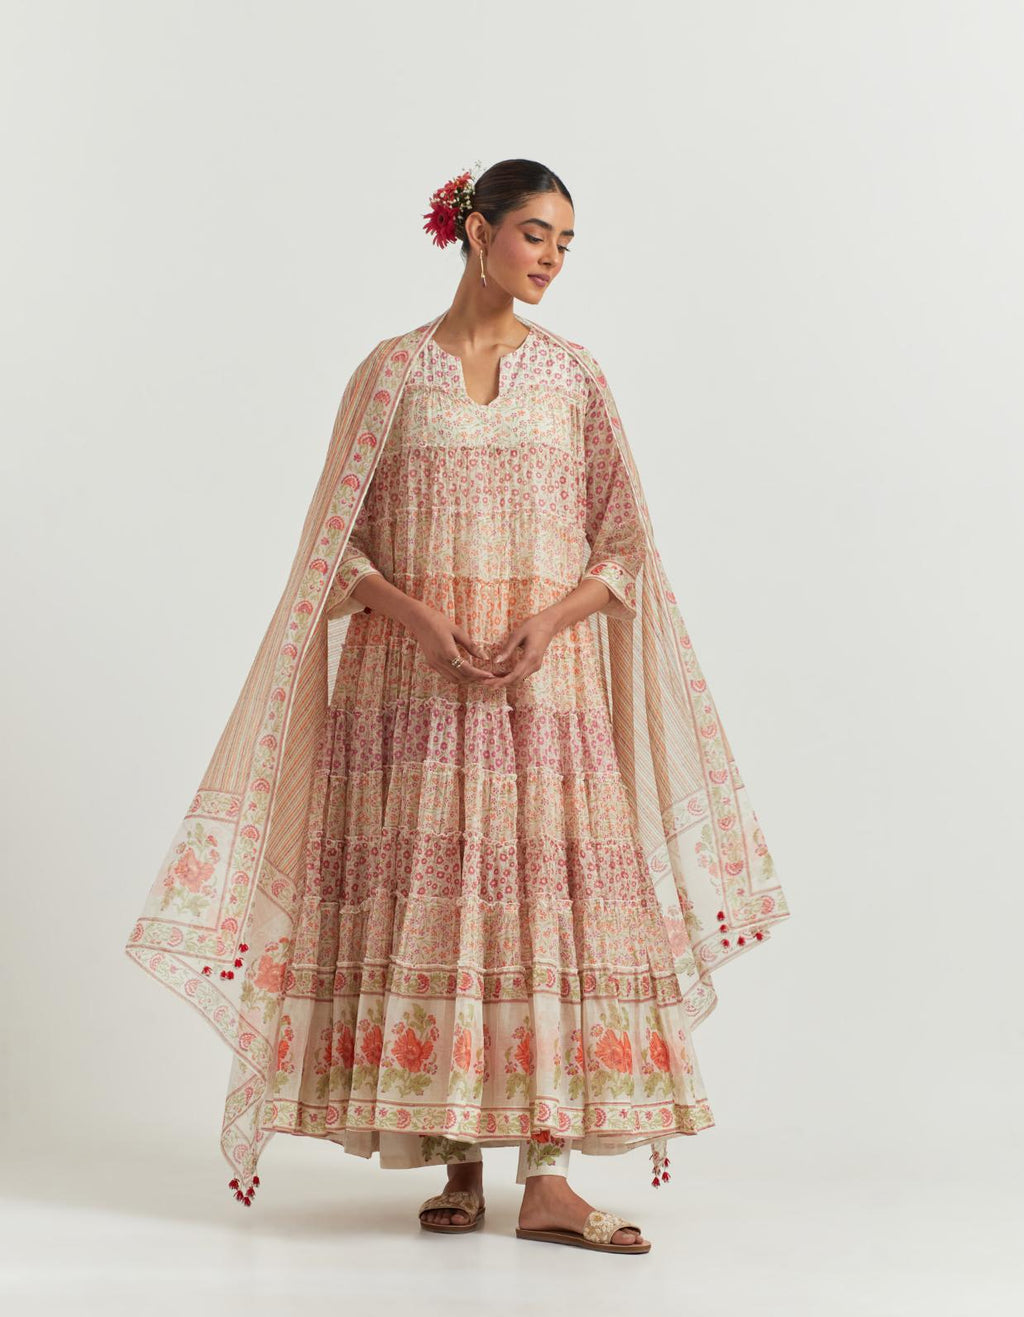 Multi colored hand block printed multi-tiered kurta dress set with 3/4 sleeves.